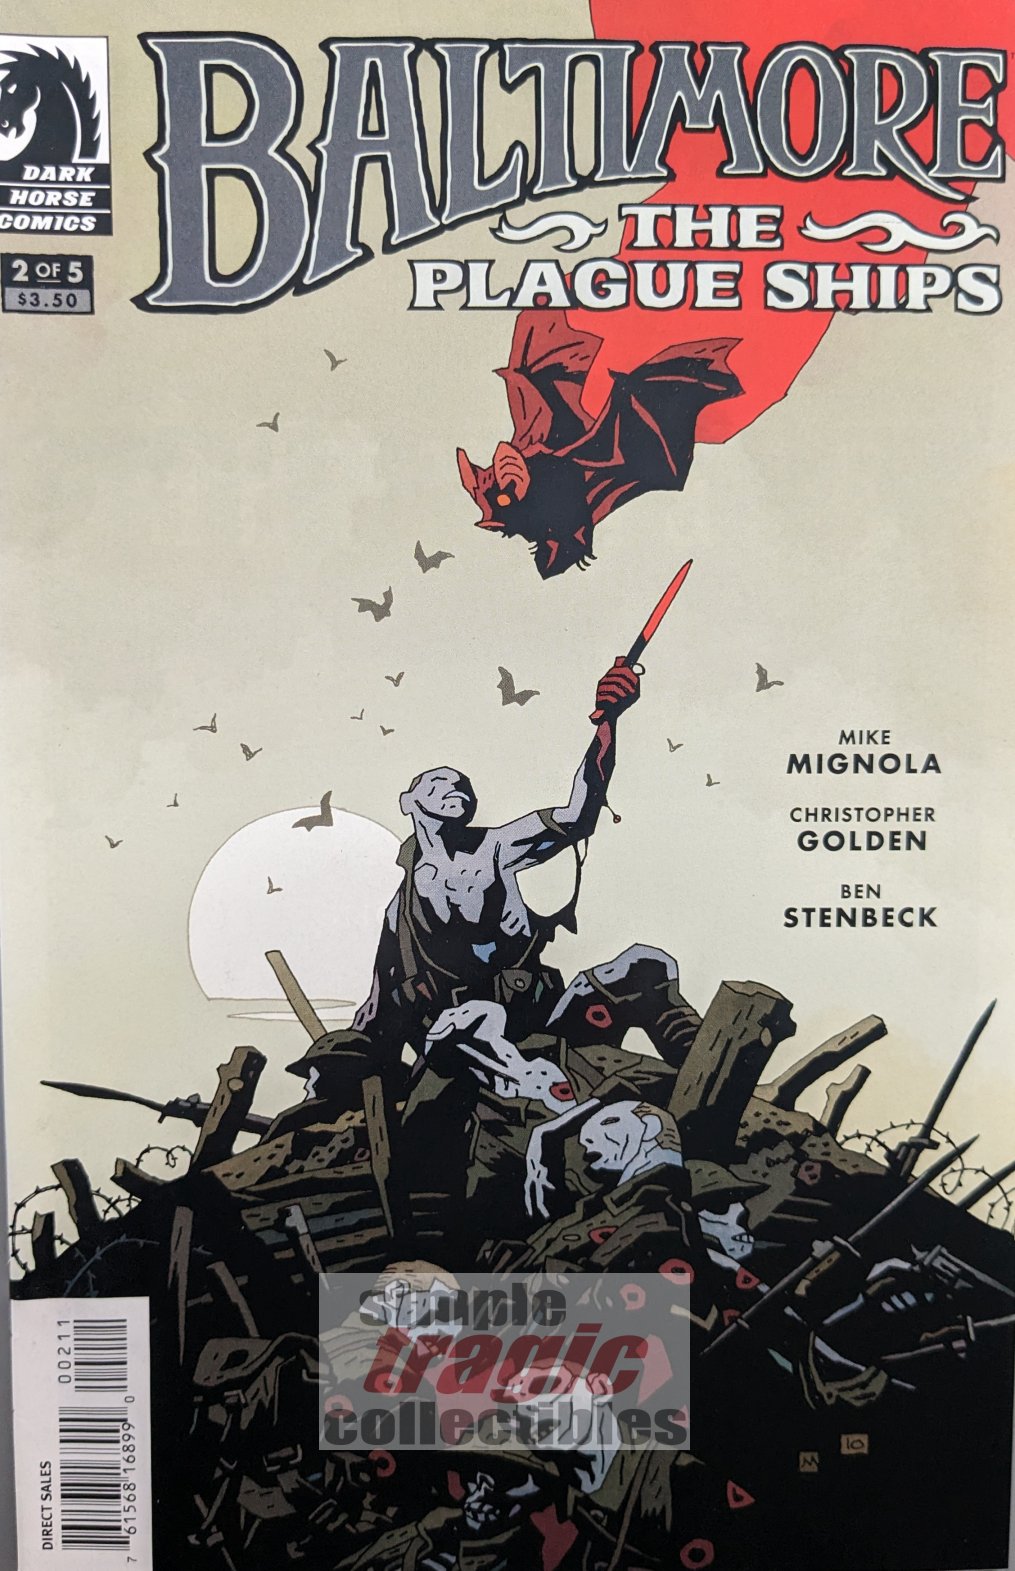 Baltimore: The Plague Ships #2 Comic Book Cover Art by Mike Mignola